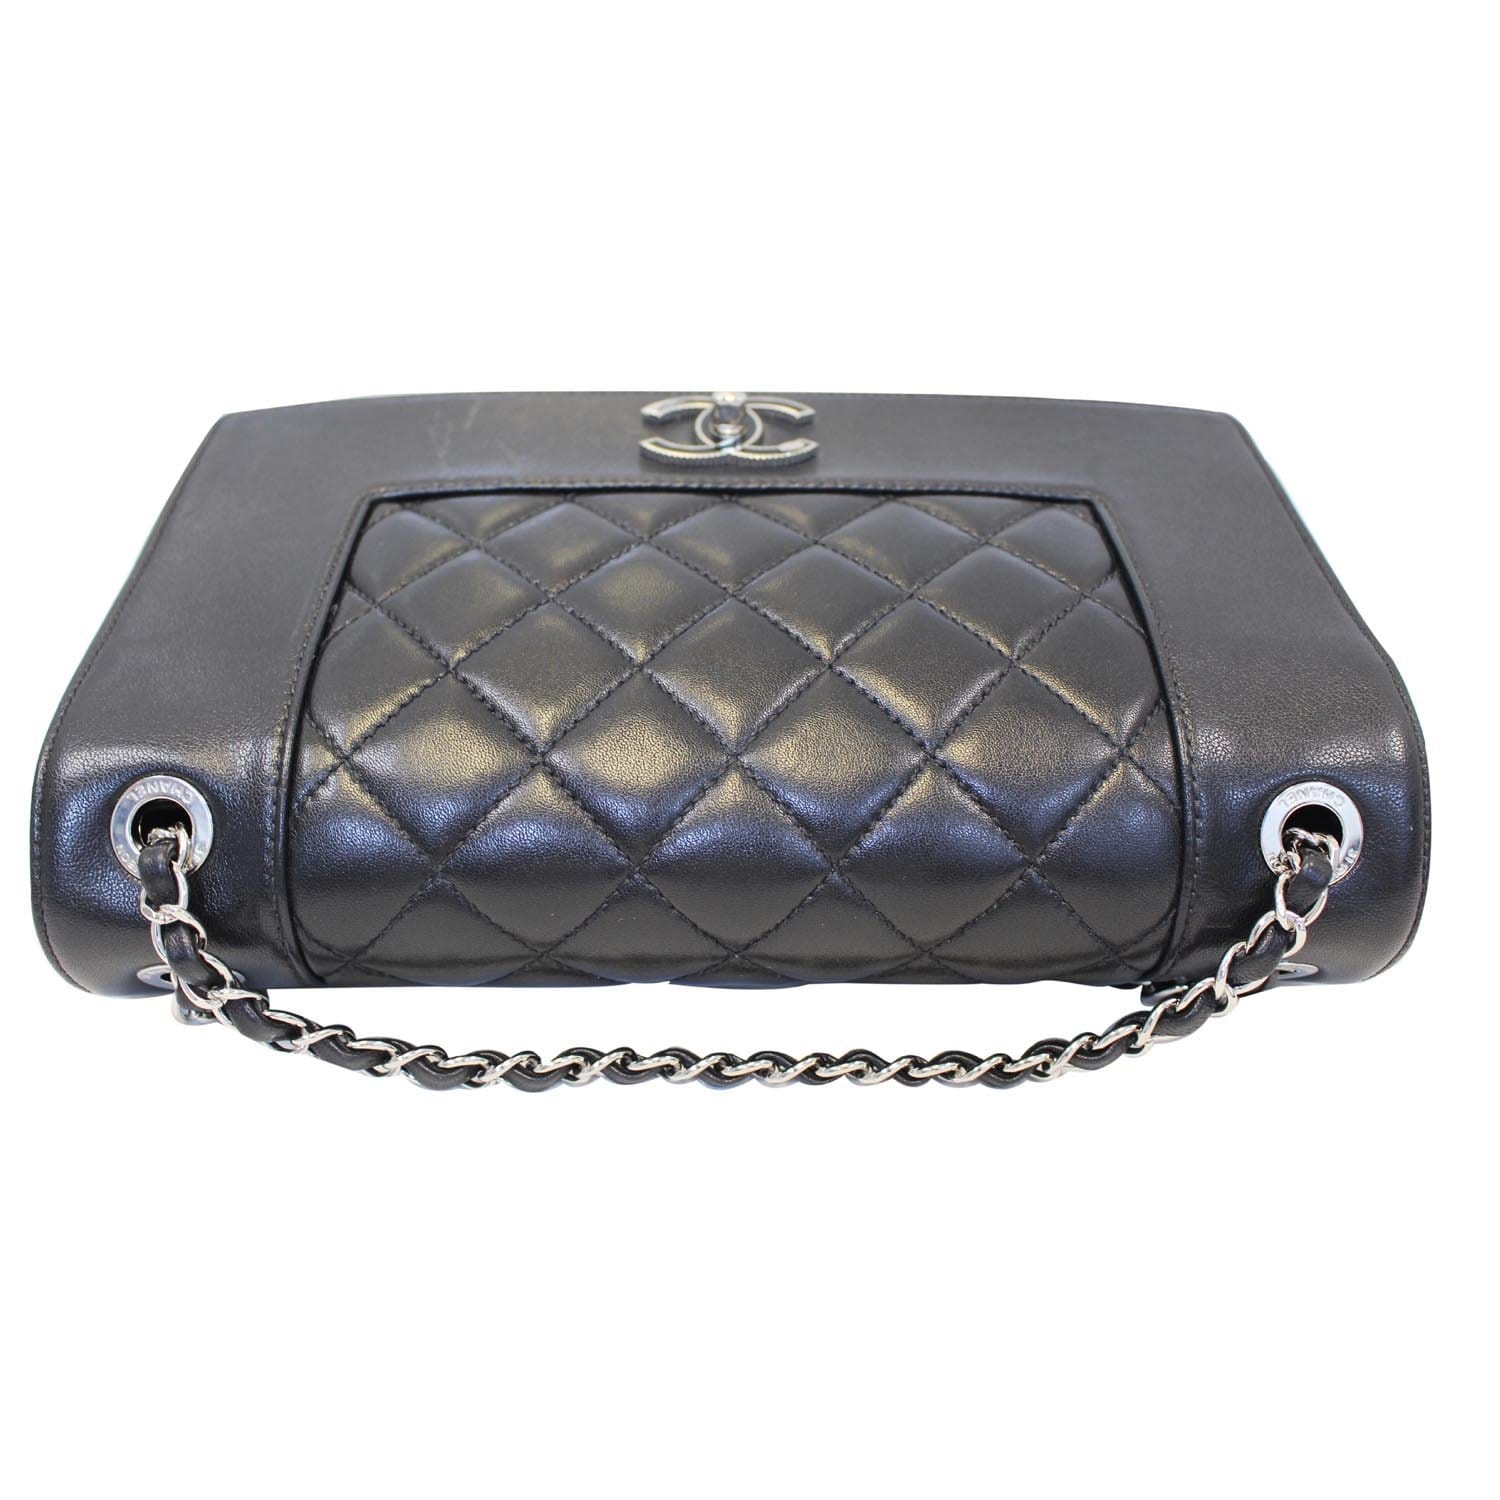 Chanel Mademoiselle Vintage Flap Bag  Flap bag Chanel bag Chanel fashion